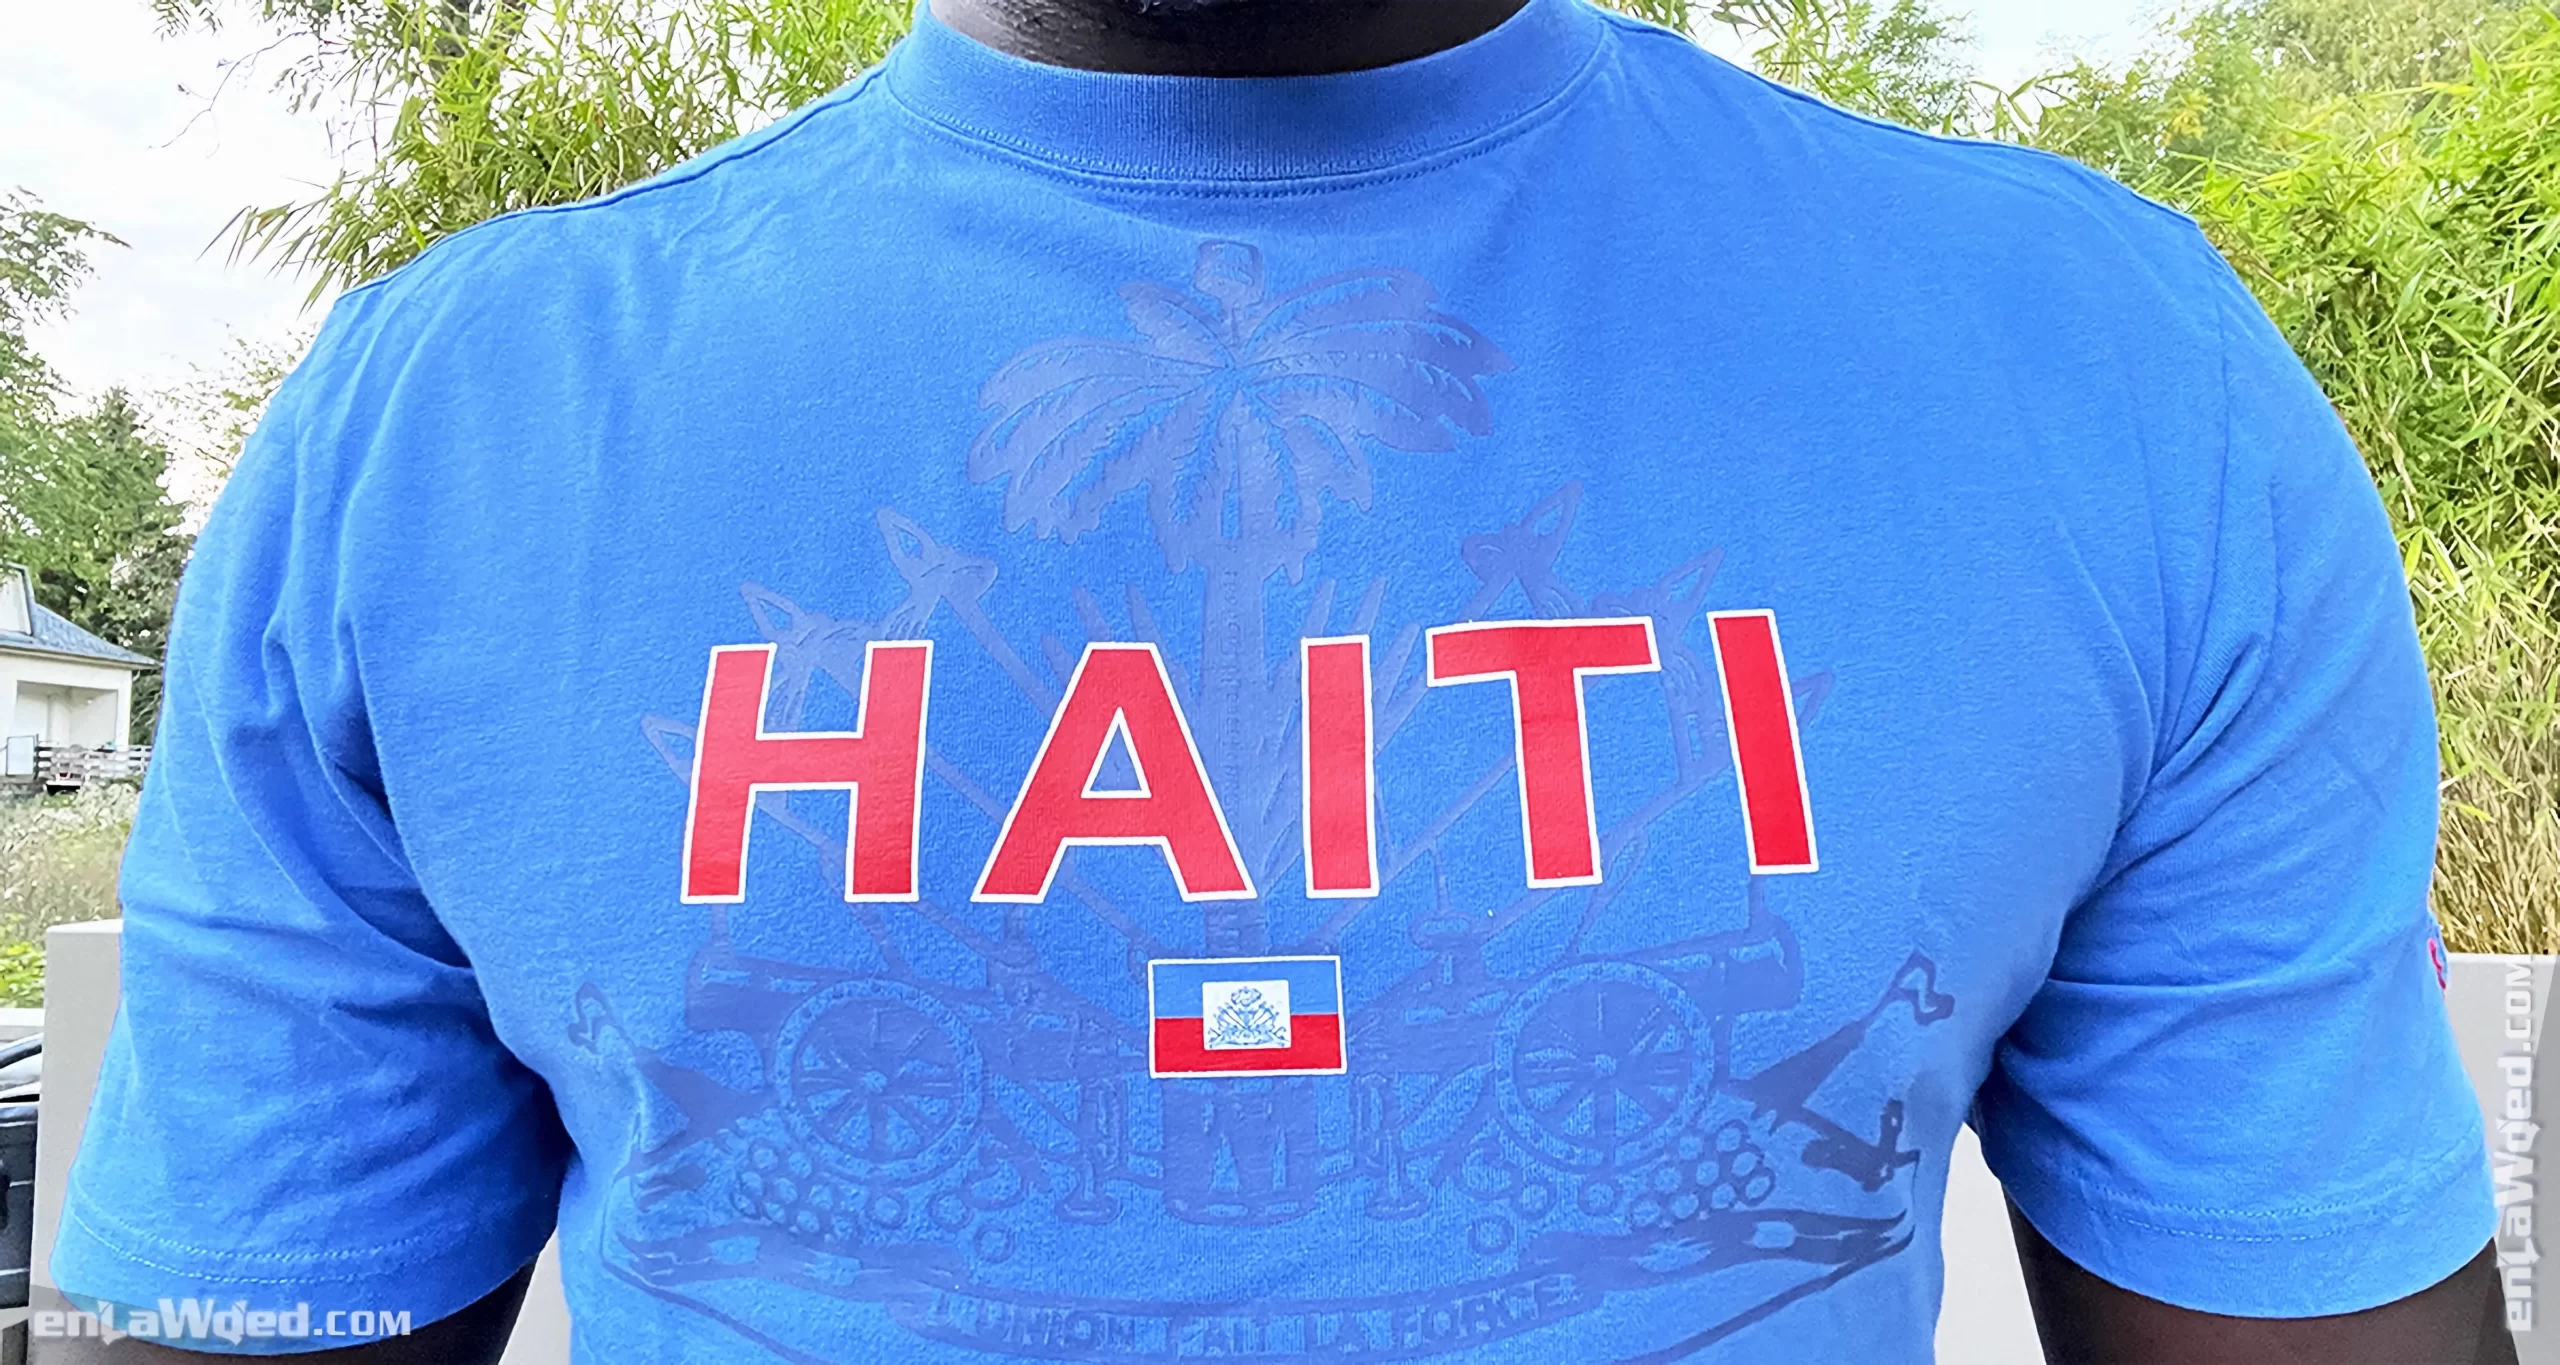 Men’s 2007 Haiti T-Shirt by Adidas Originals: Uplifted (EnLawded.com file #lp1n82so126196lhv62j76pso)